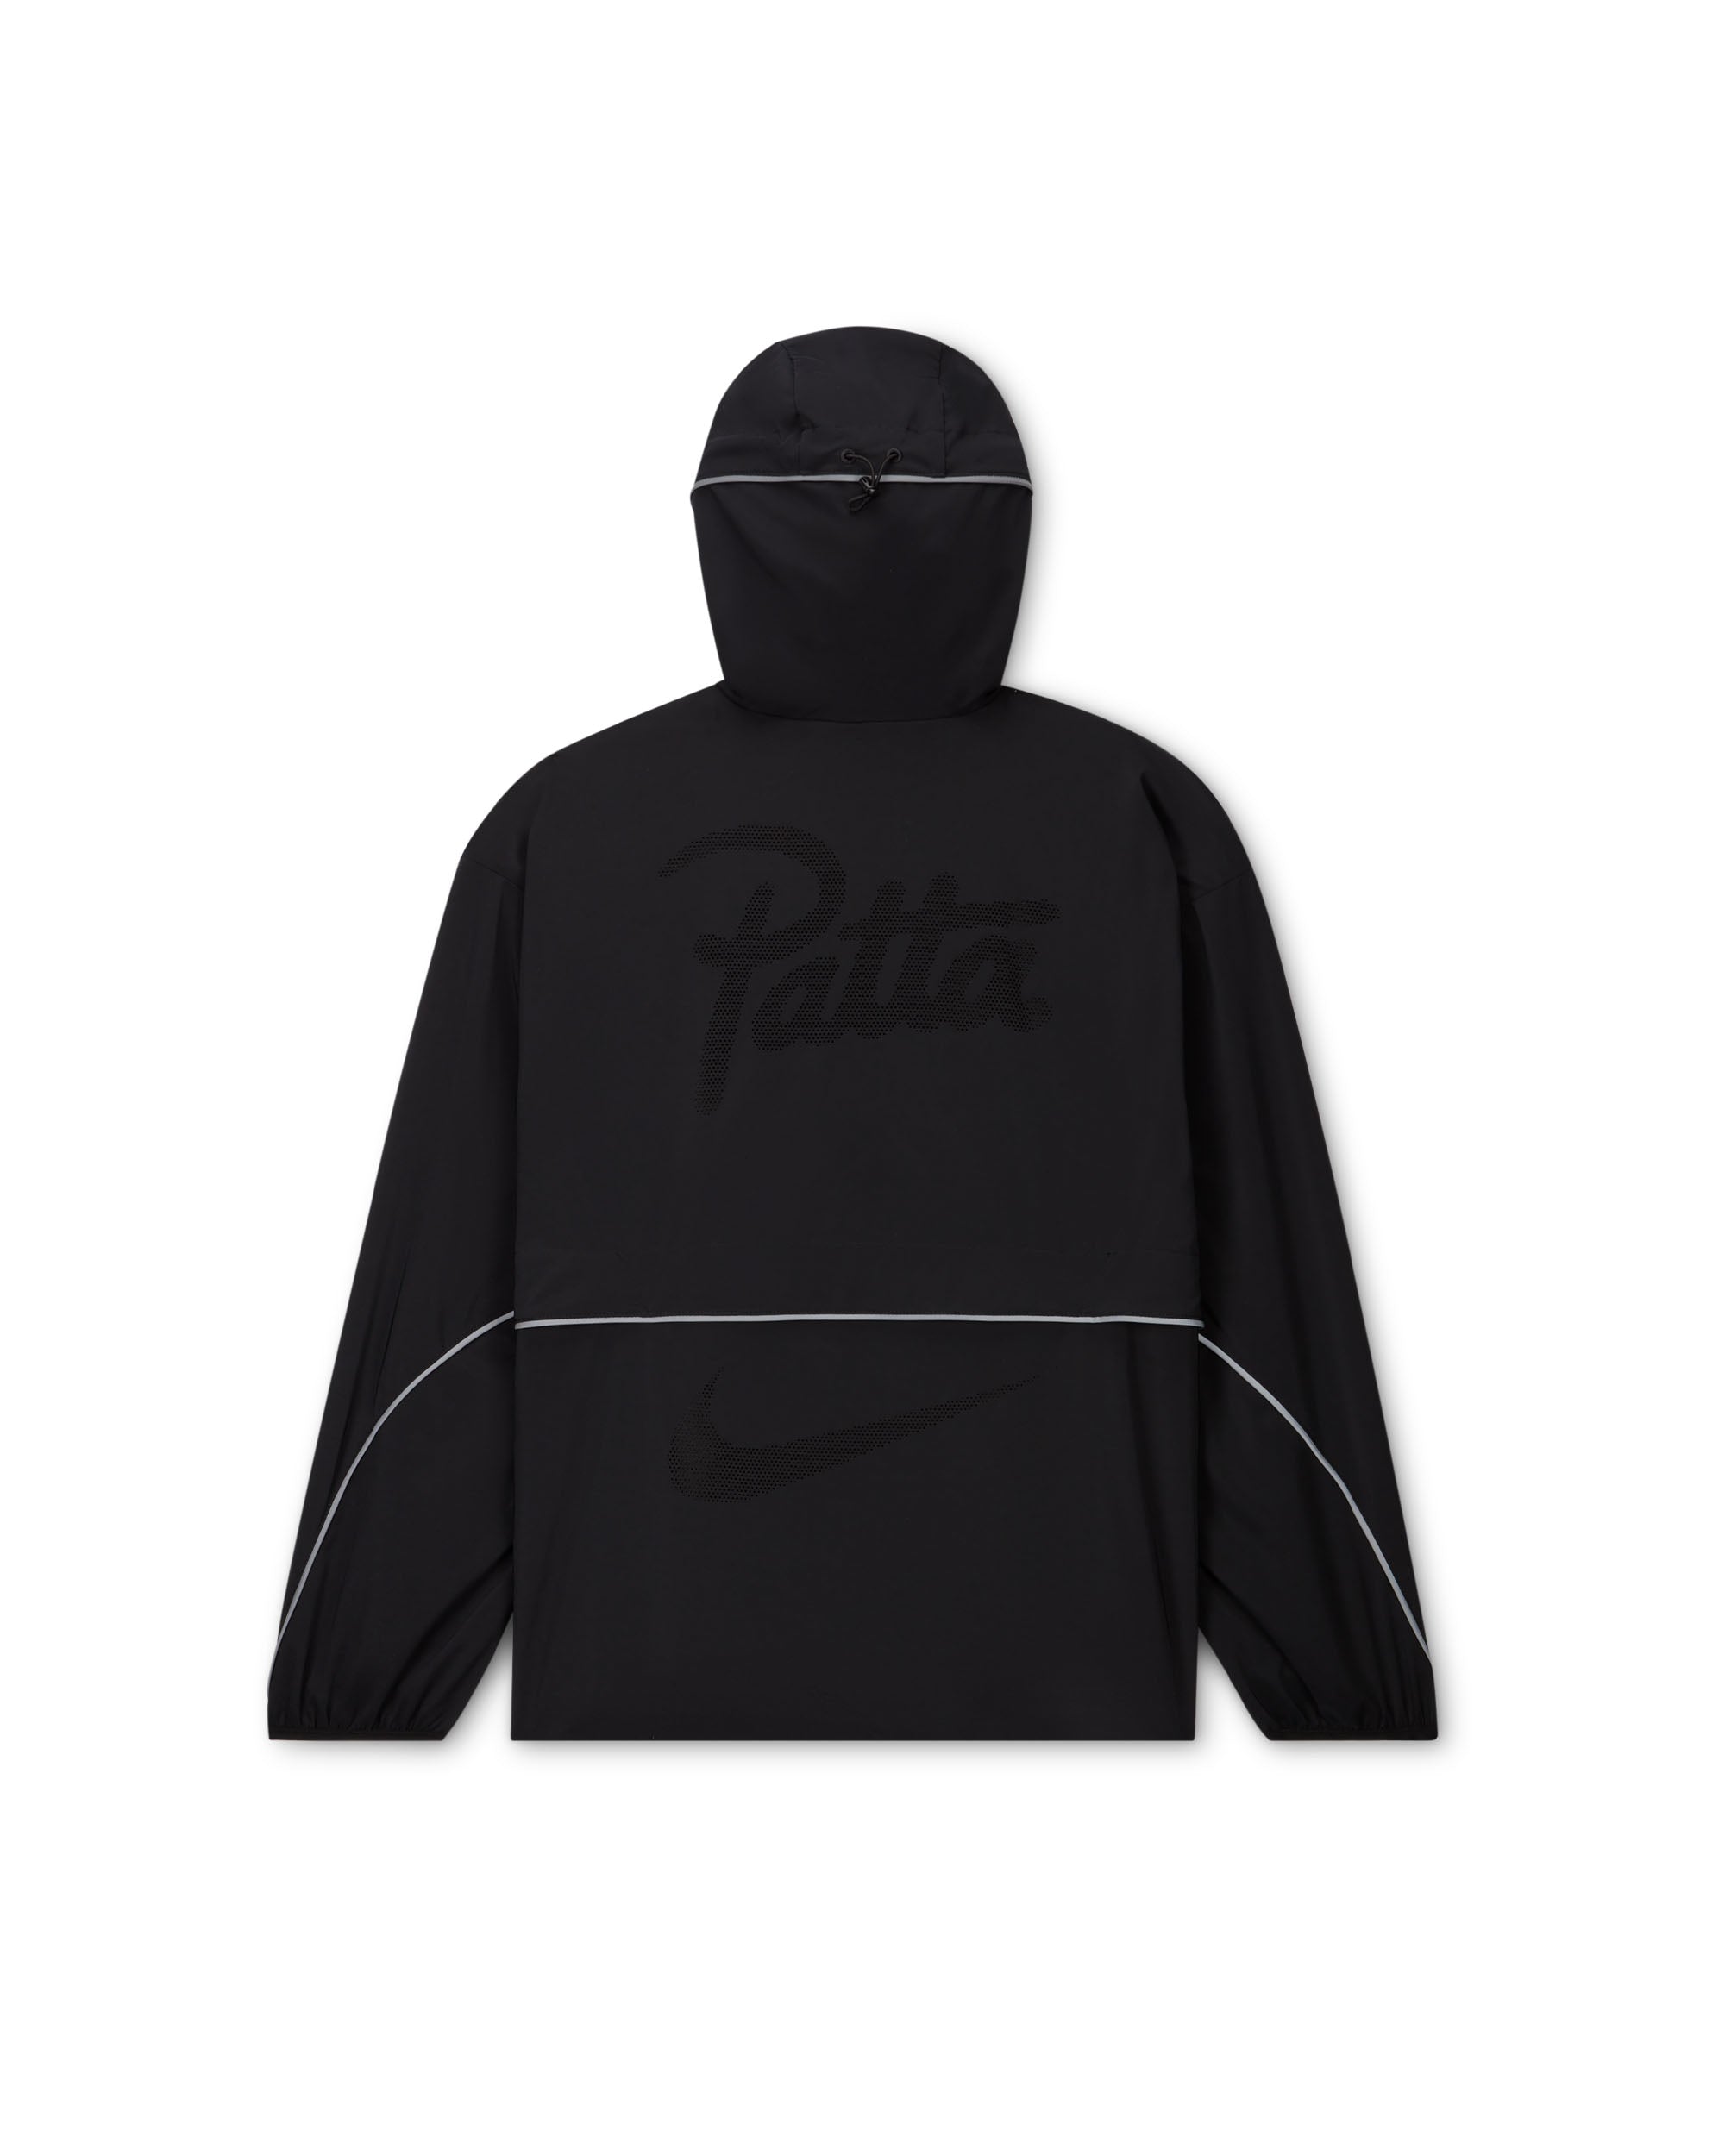 Patta Full-Zip Jacket - Black